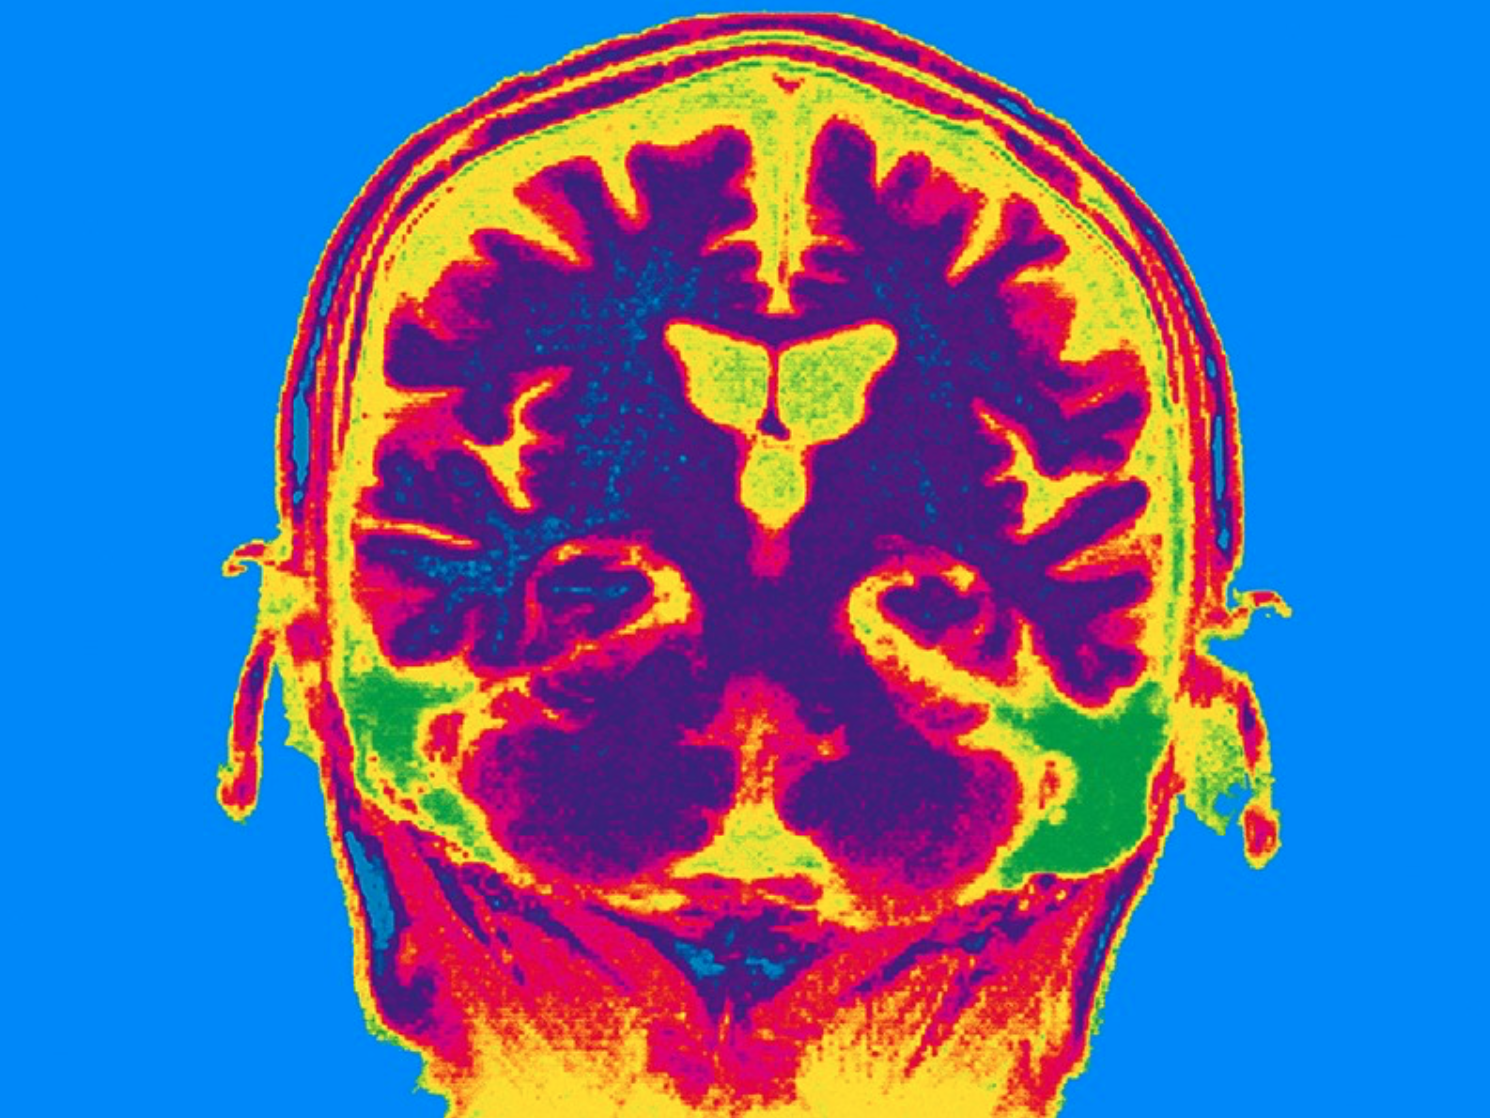 Non-invasive stimulation improves memory in study